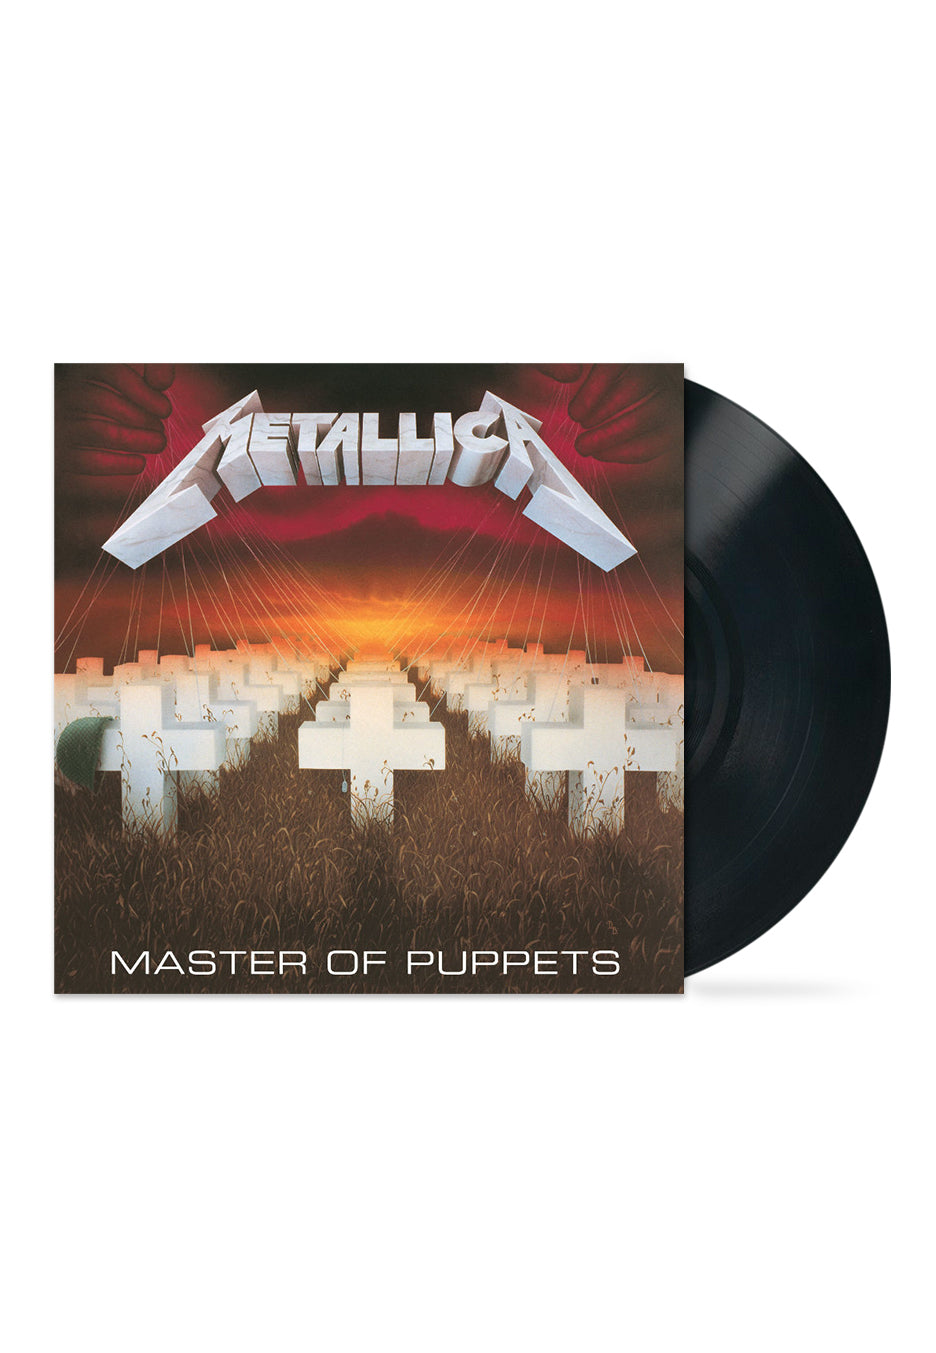 Metallica - Master Of Puppets (Remastered) - Vinyl